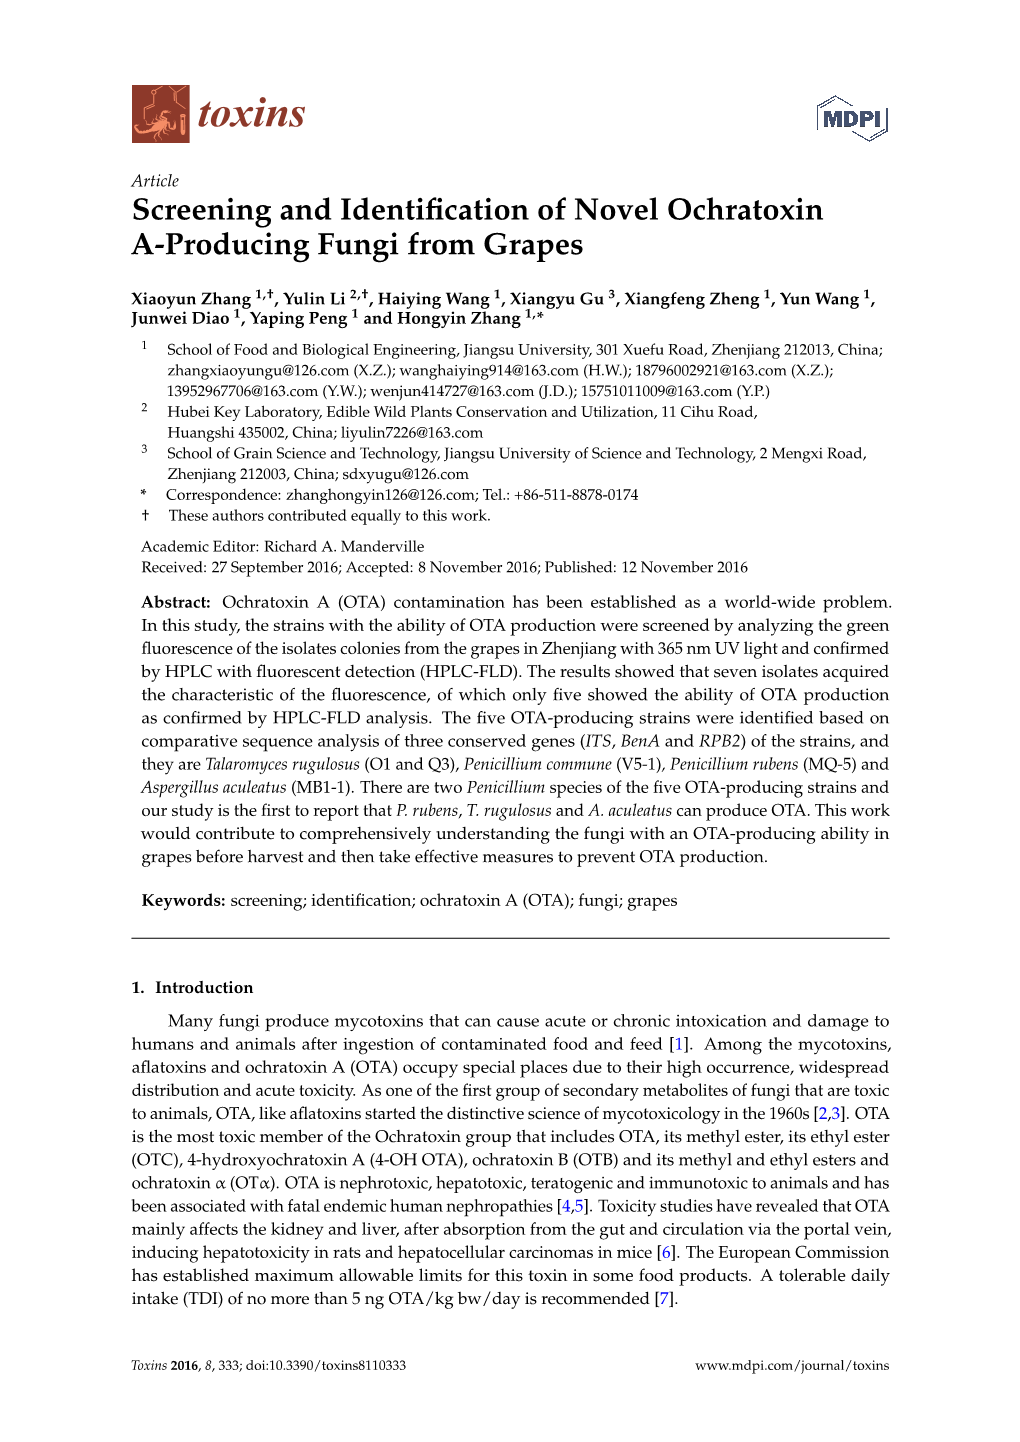 Screening and Identification of Novel Ochratoxin A-Producing Fungi From